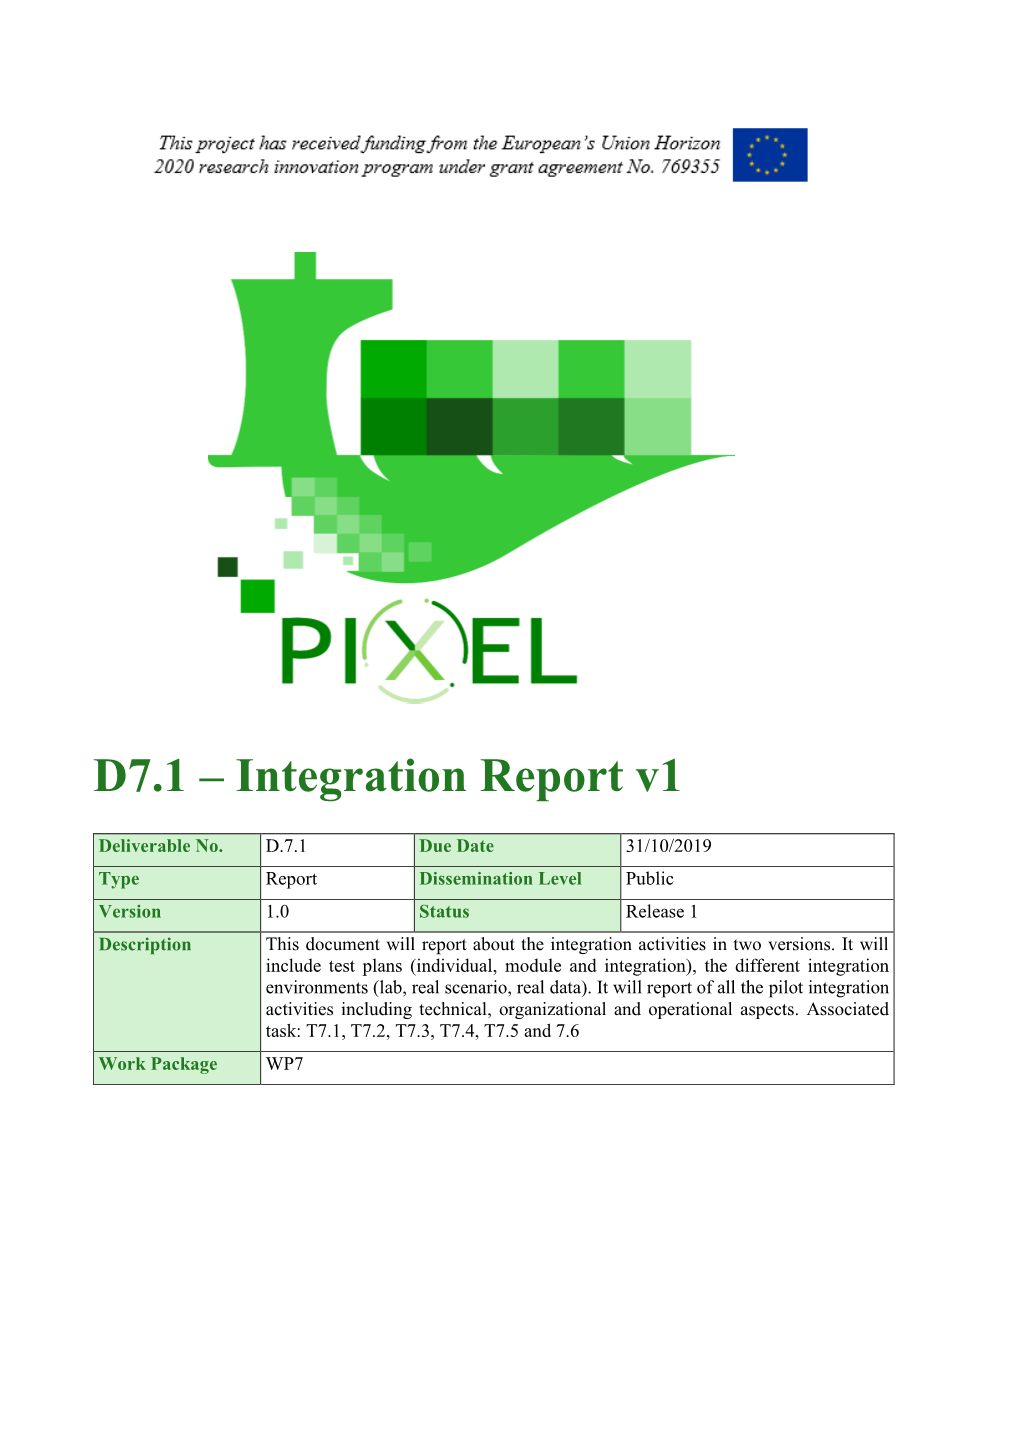 D7.1 – Integration Report V1